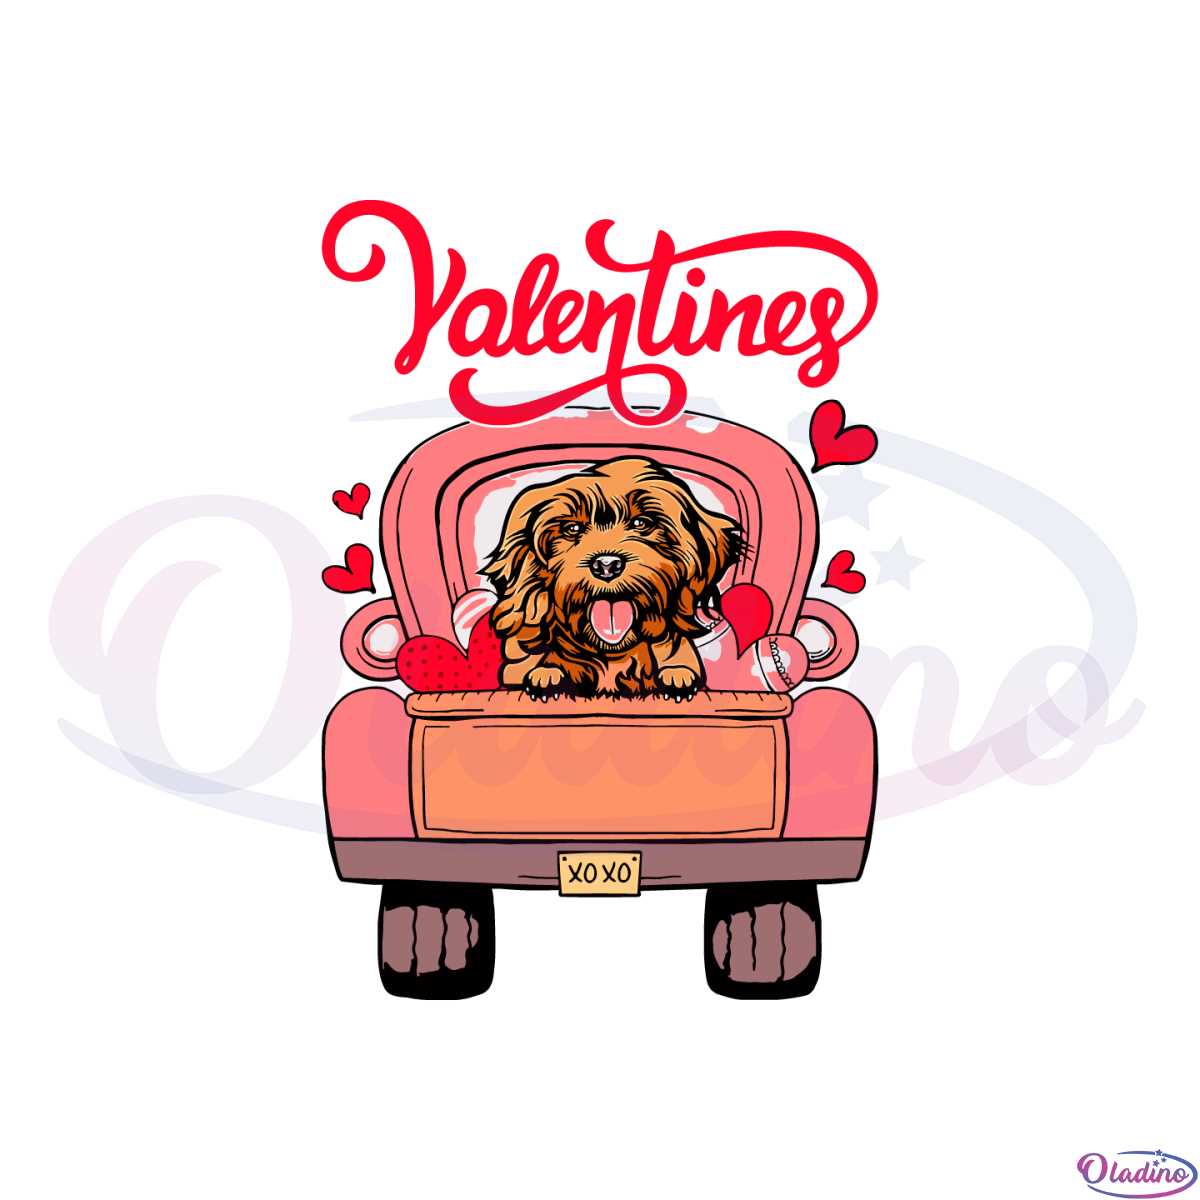 red-truck-happy-valentines-day-svg-graphic-designs-files